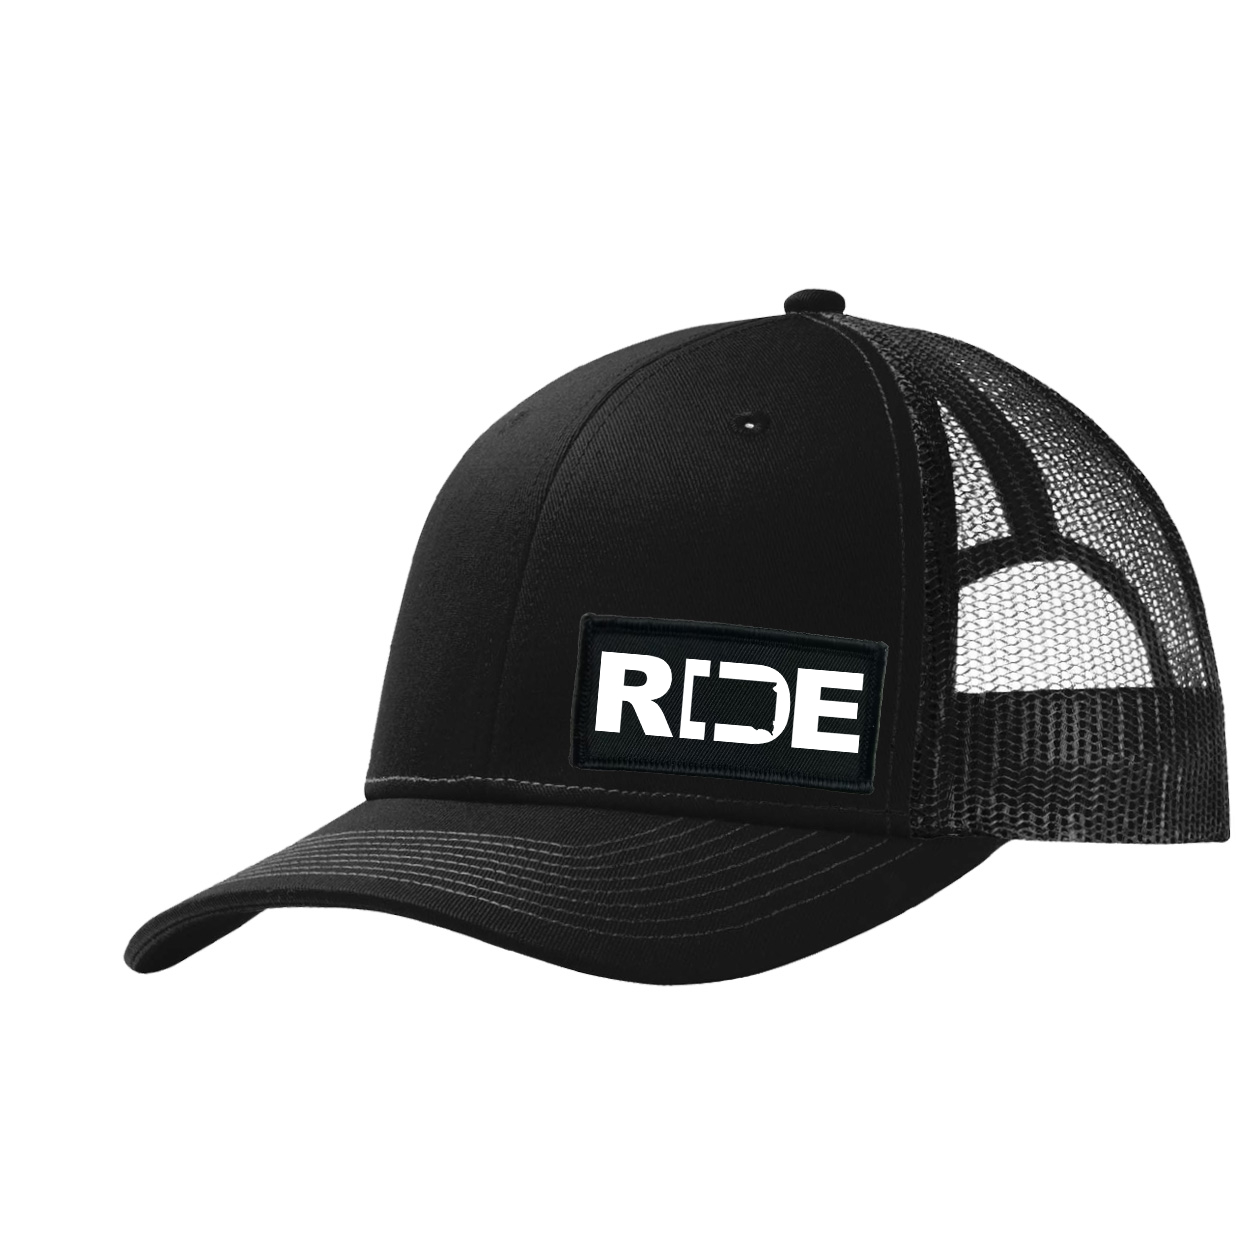 Ride South Dakota Night Out Woven Patch Snapback Trucker Hat Black (White Logo)